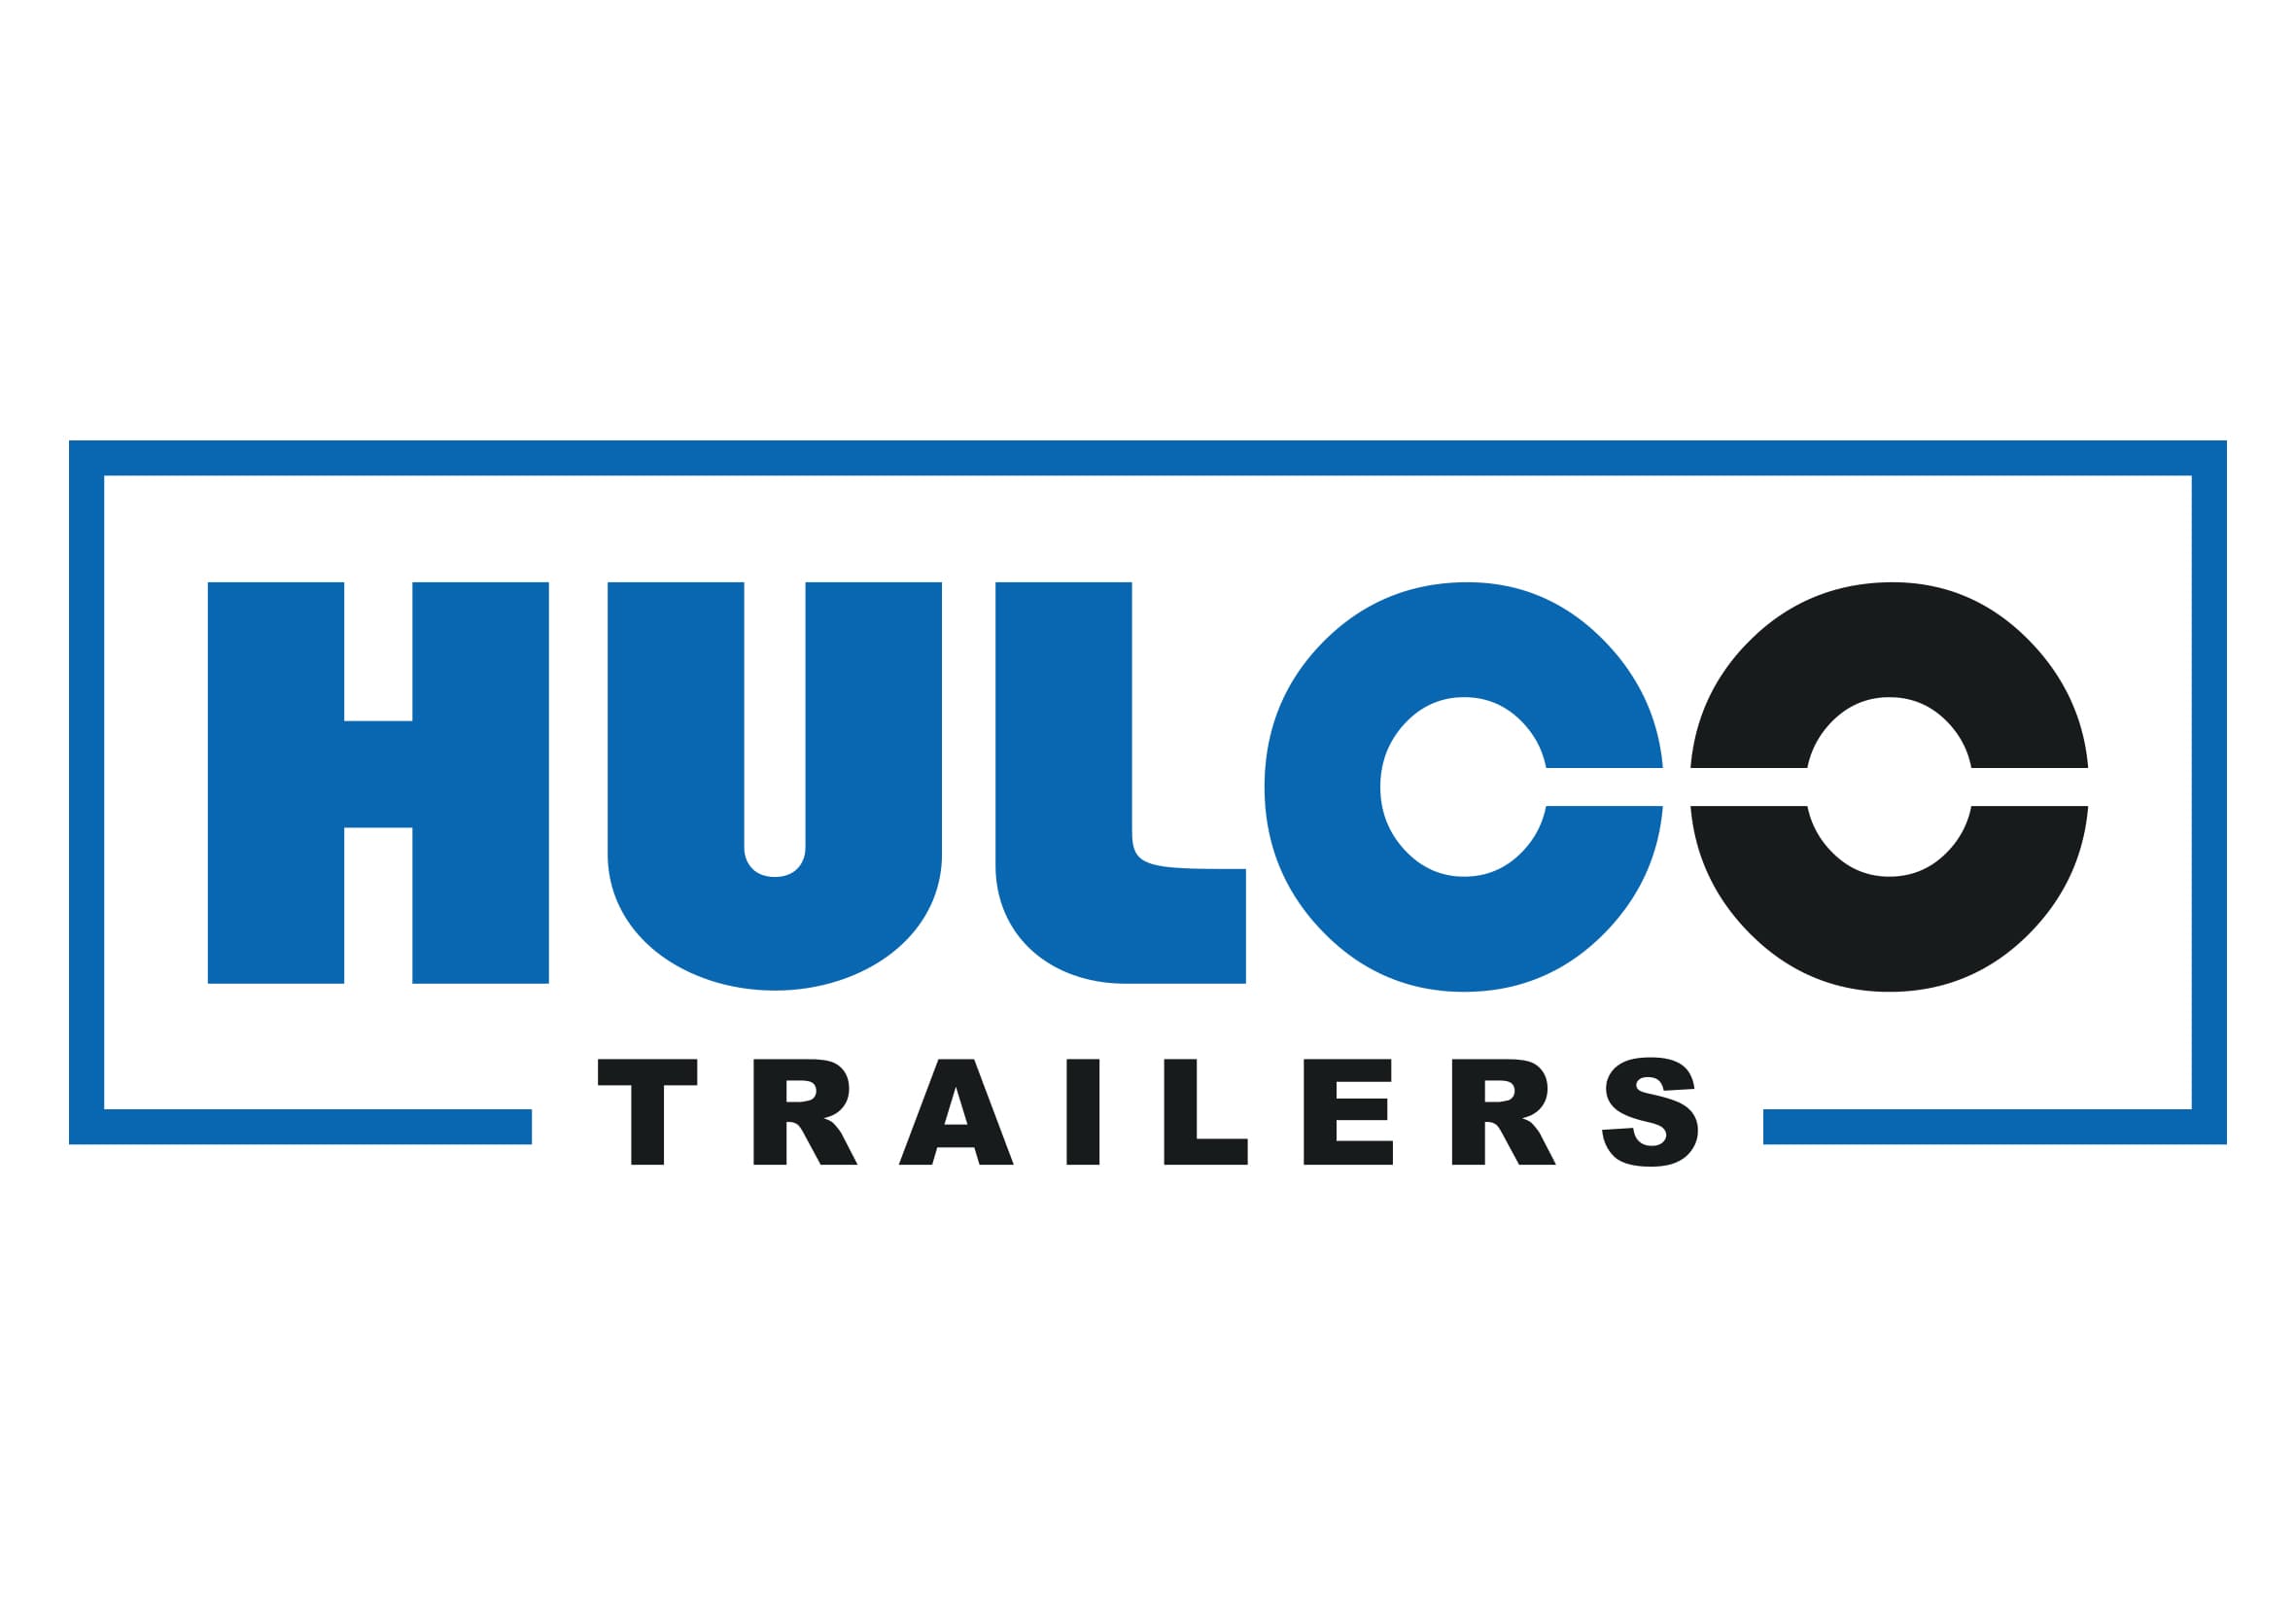 Hulco-logo